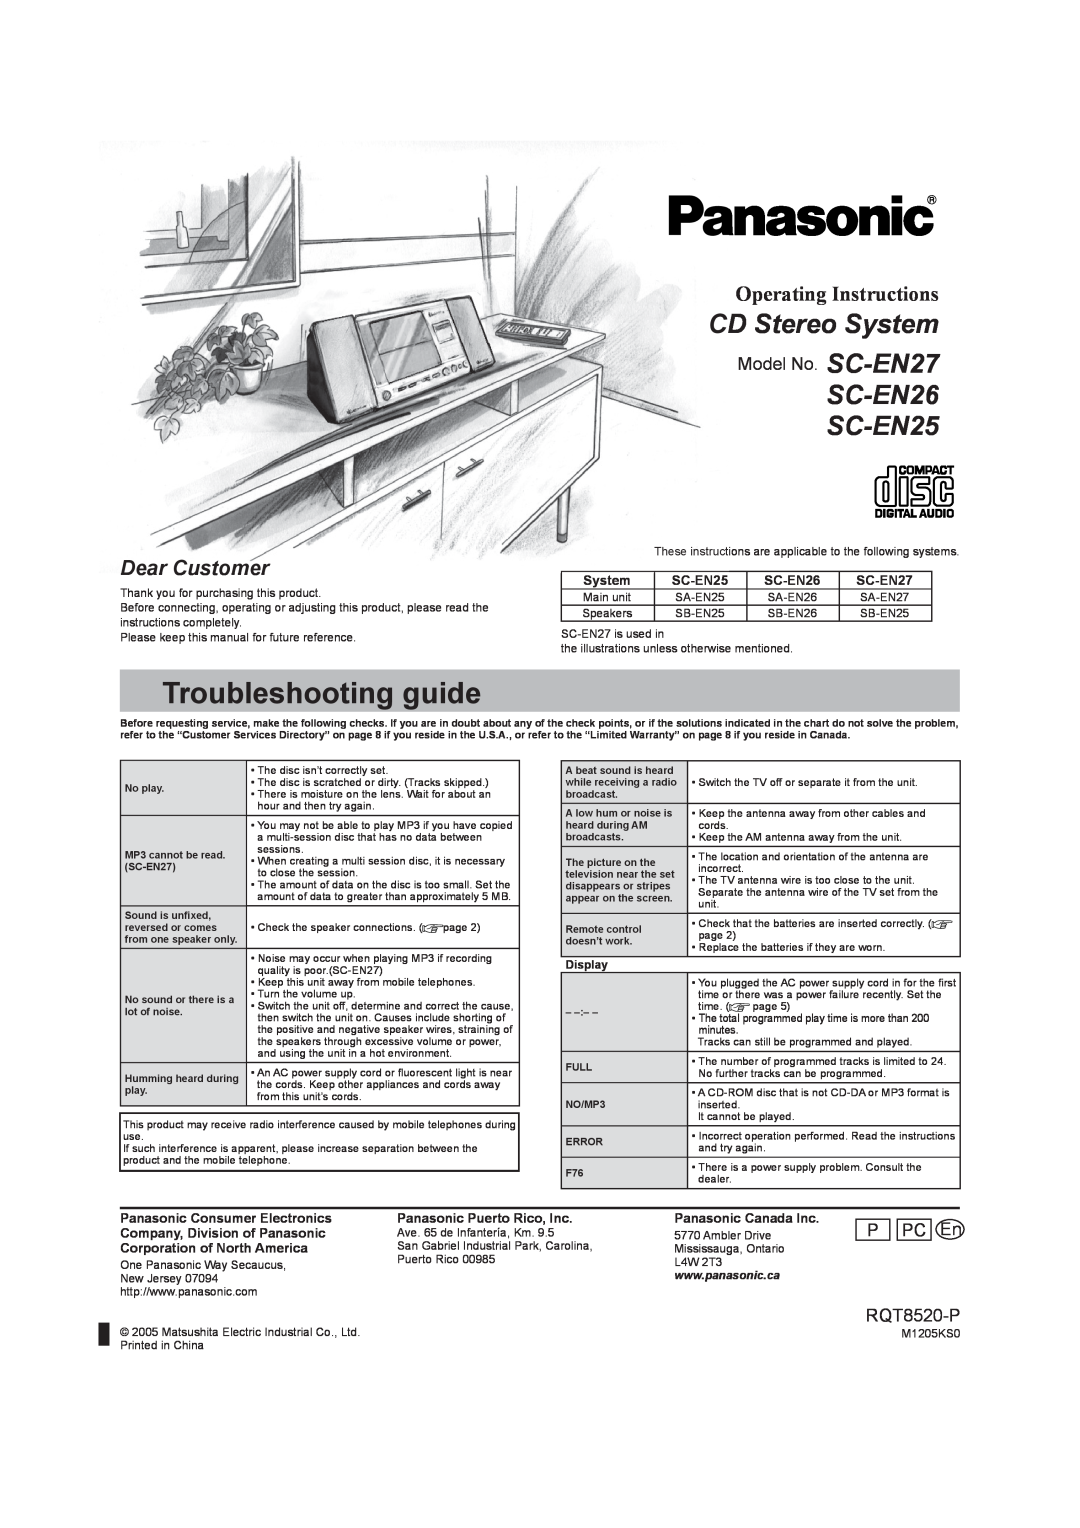 Panasonic SC-EN25 warranty Troubleshooting guide, System, SC-EN26, SC-EN27, Panasonic Consumer Electronics 